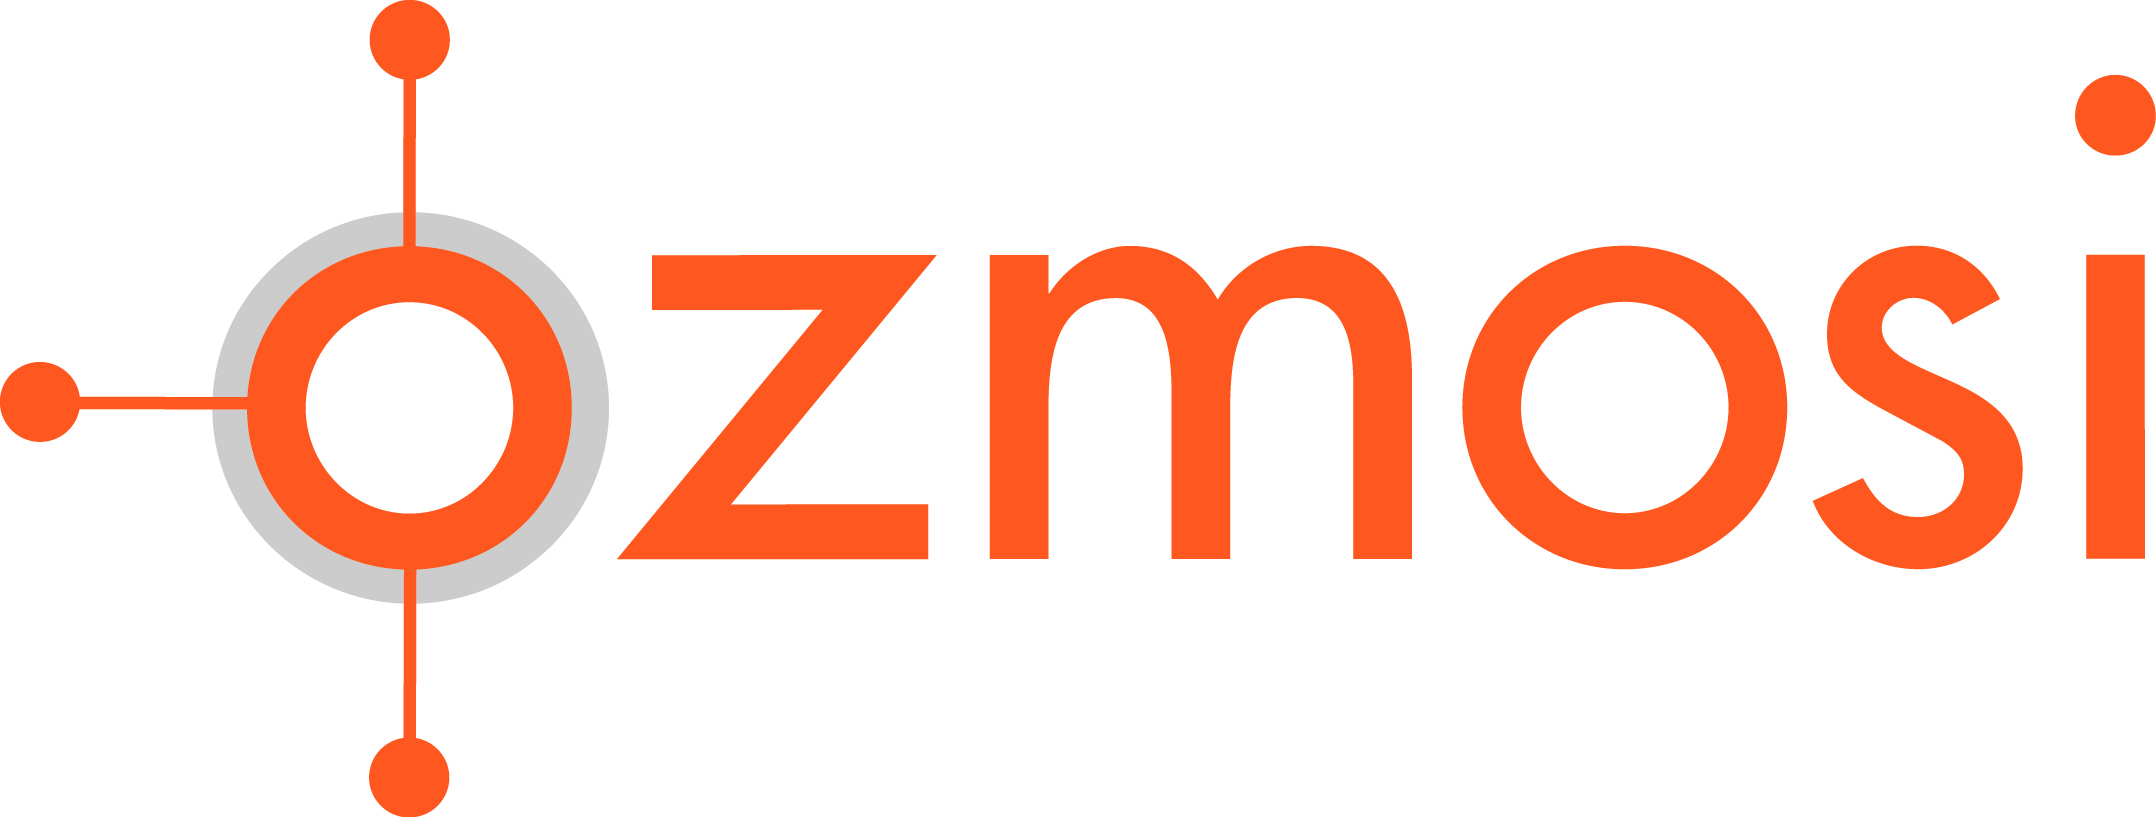 Ozmosi_Logo.jpg